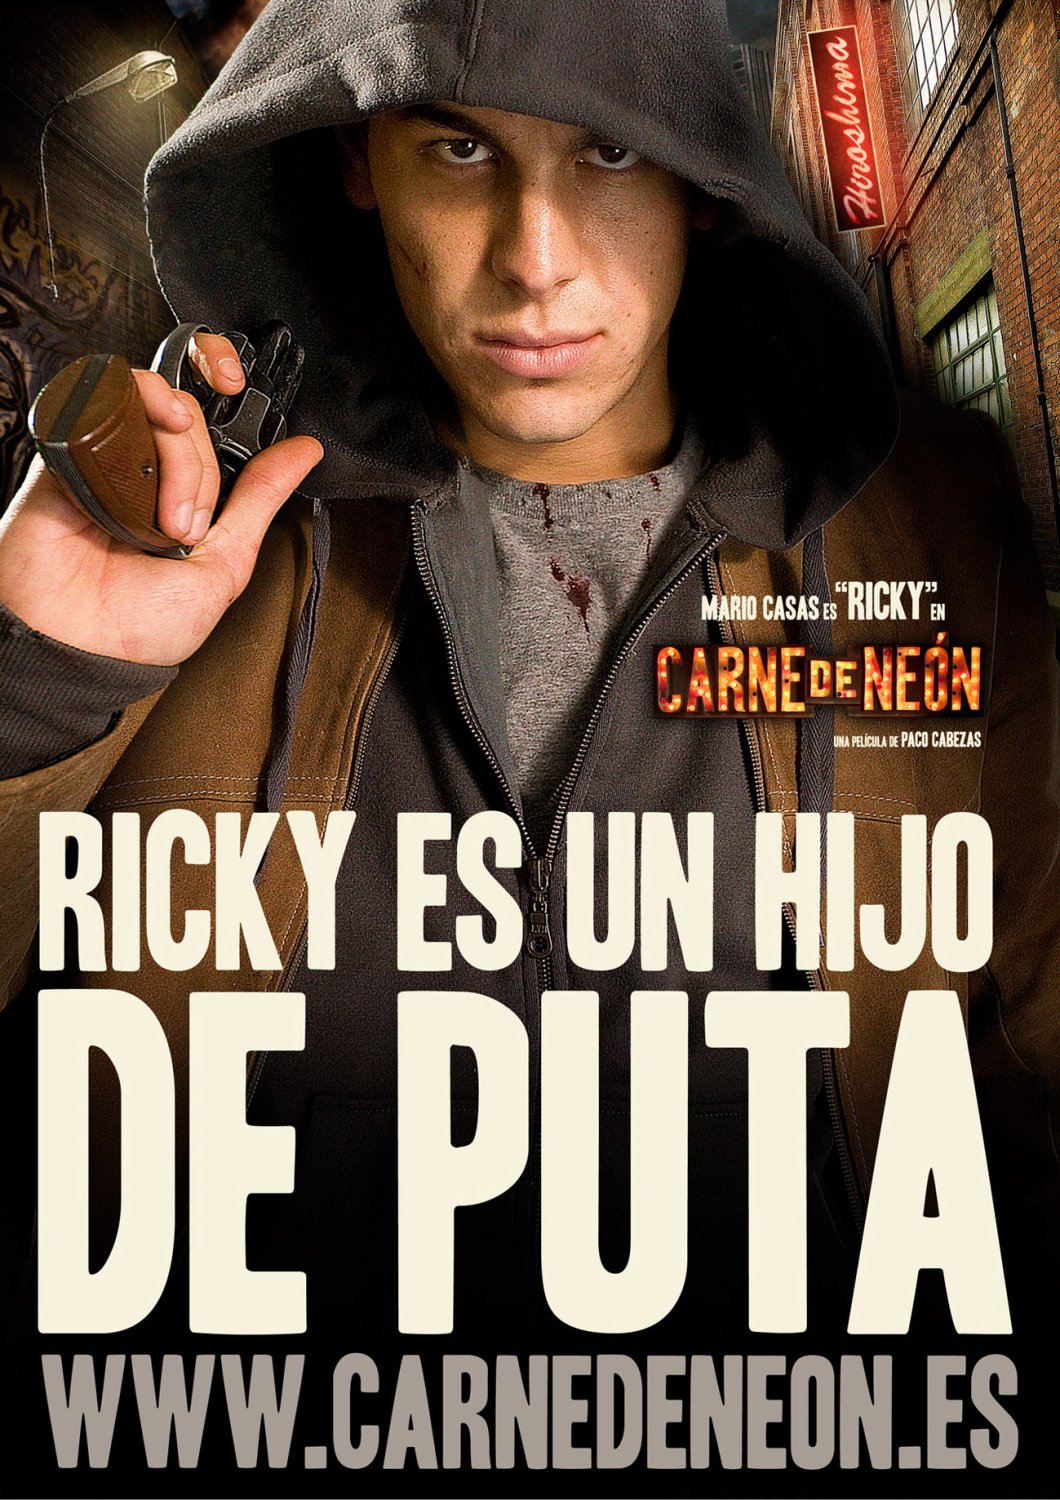 Extra Large Movie Poster Image for Carne de neón (#4 of 5)